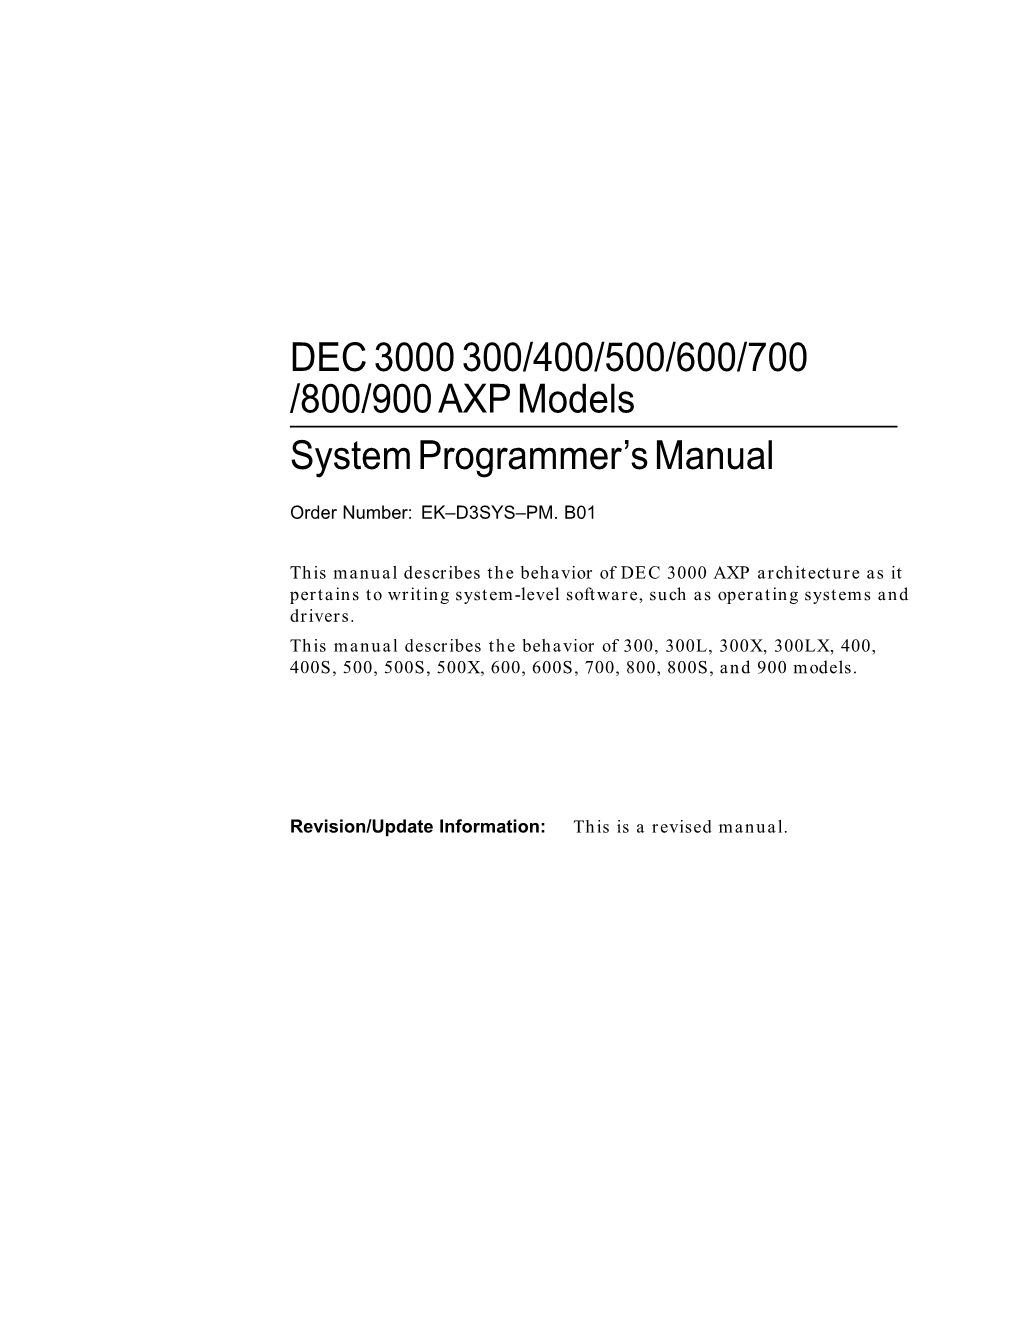 400/500/600/700/800/ 900 Sys Prog Manual